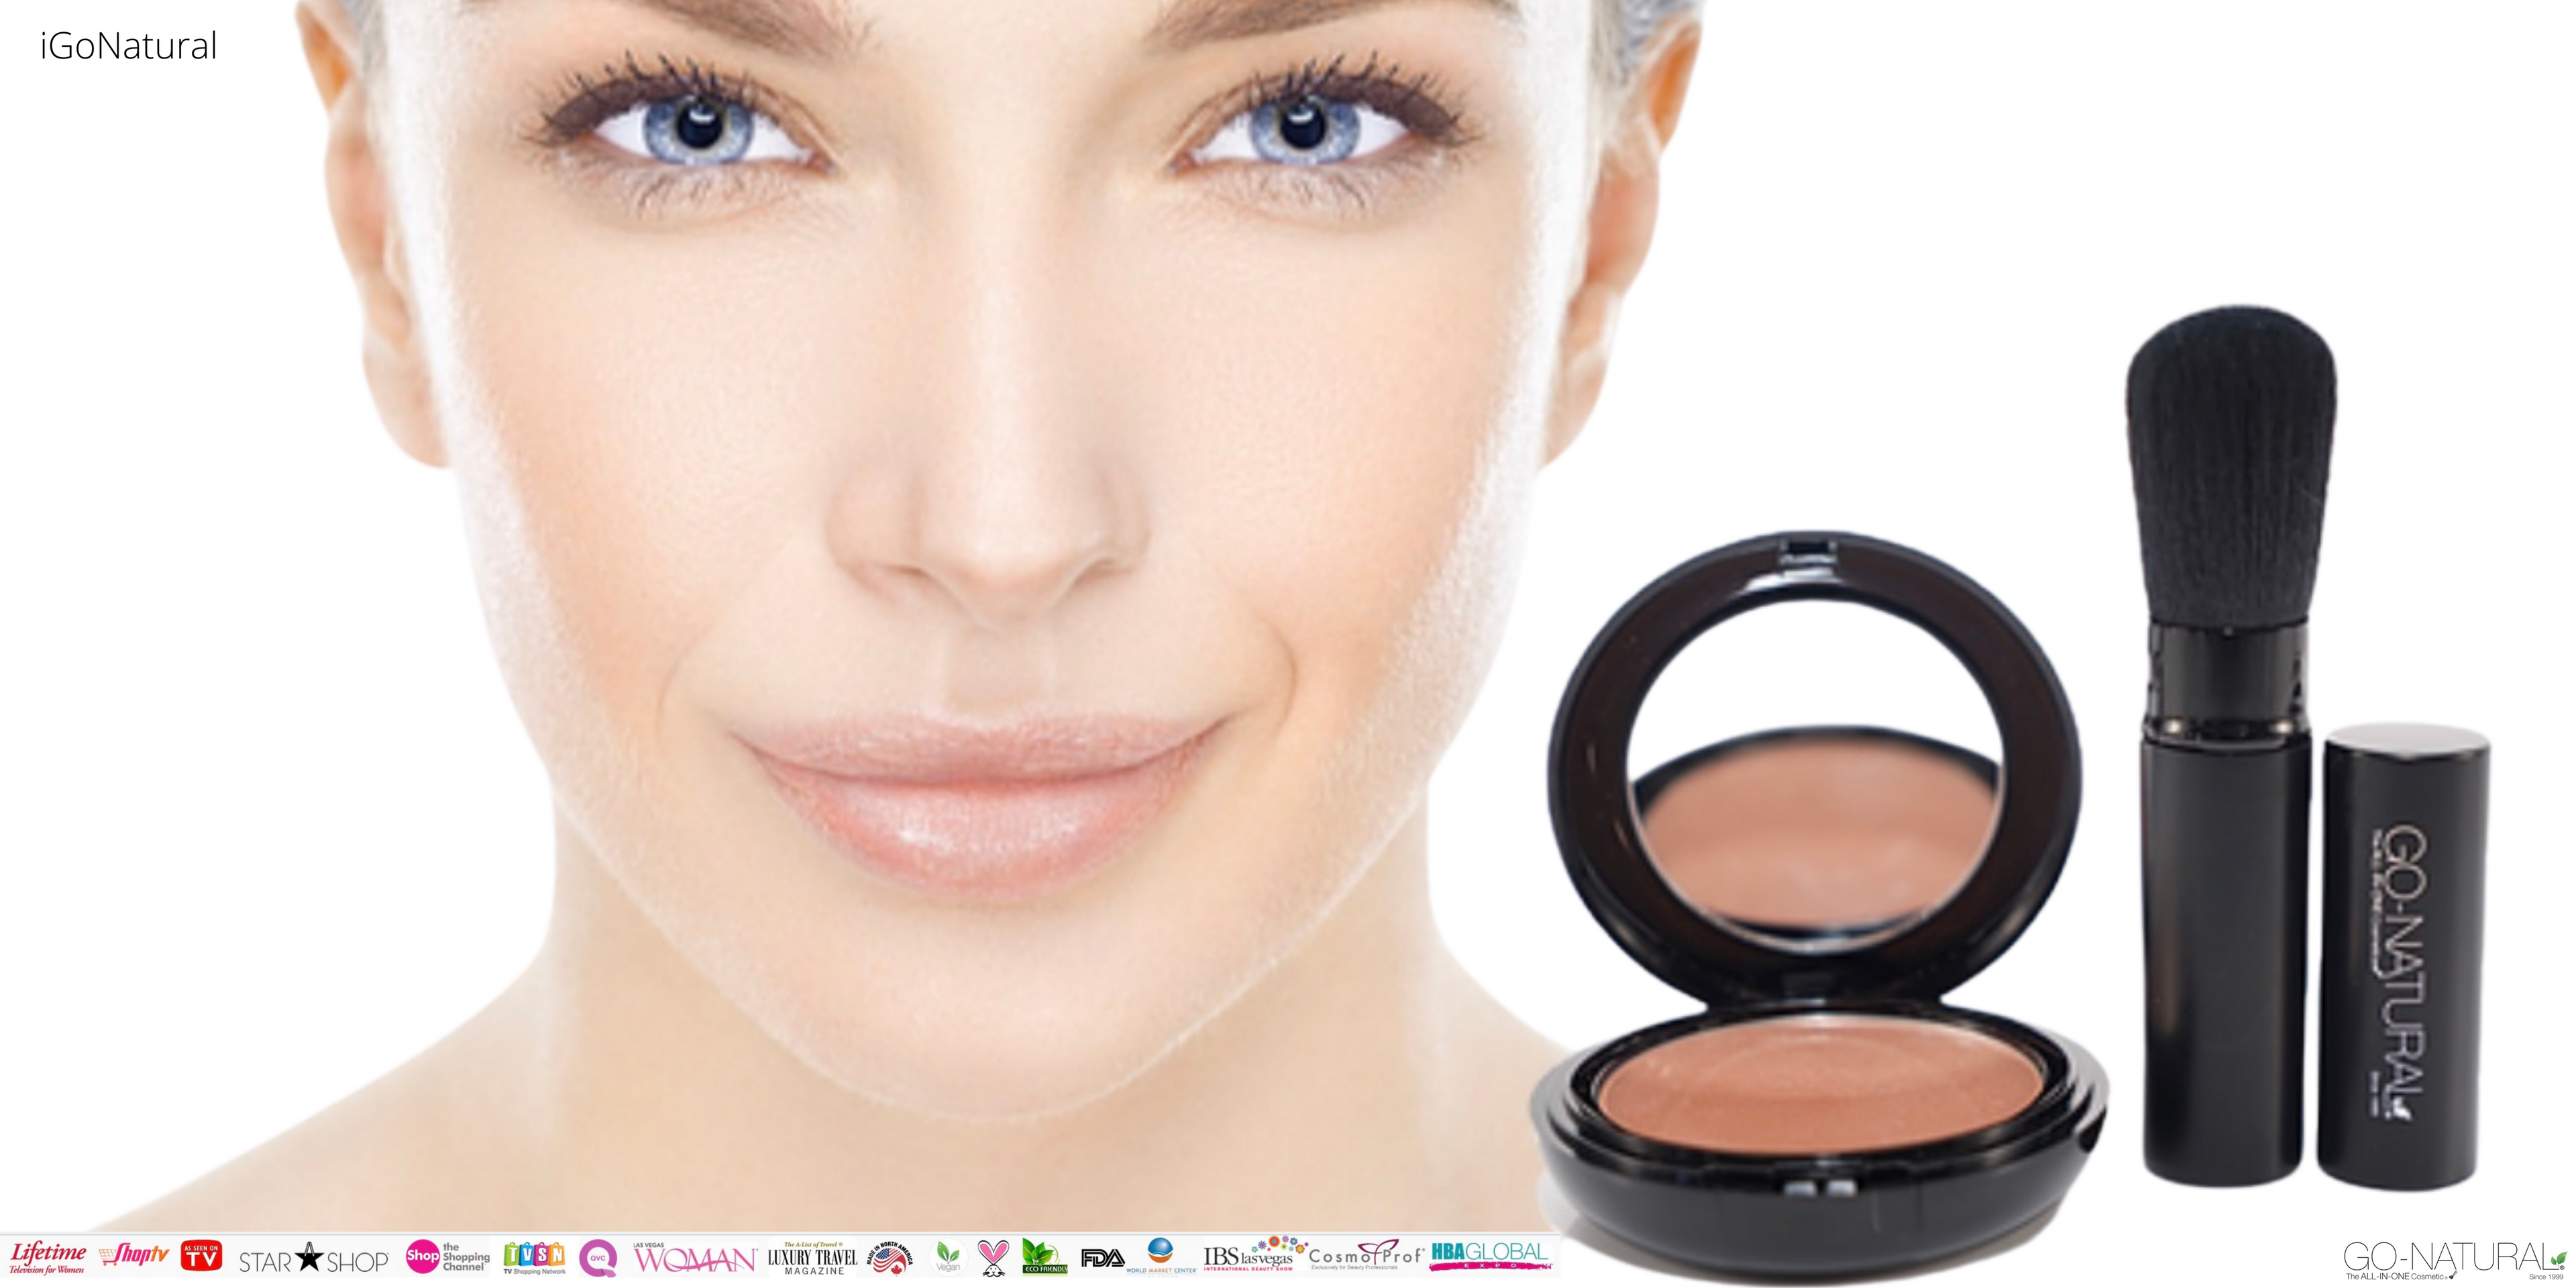 forsendelse Udgående Asser iGoNatural® Go-Natural ALL-IN-ONE Cosmetic Powder Makeup Compact Set